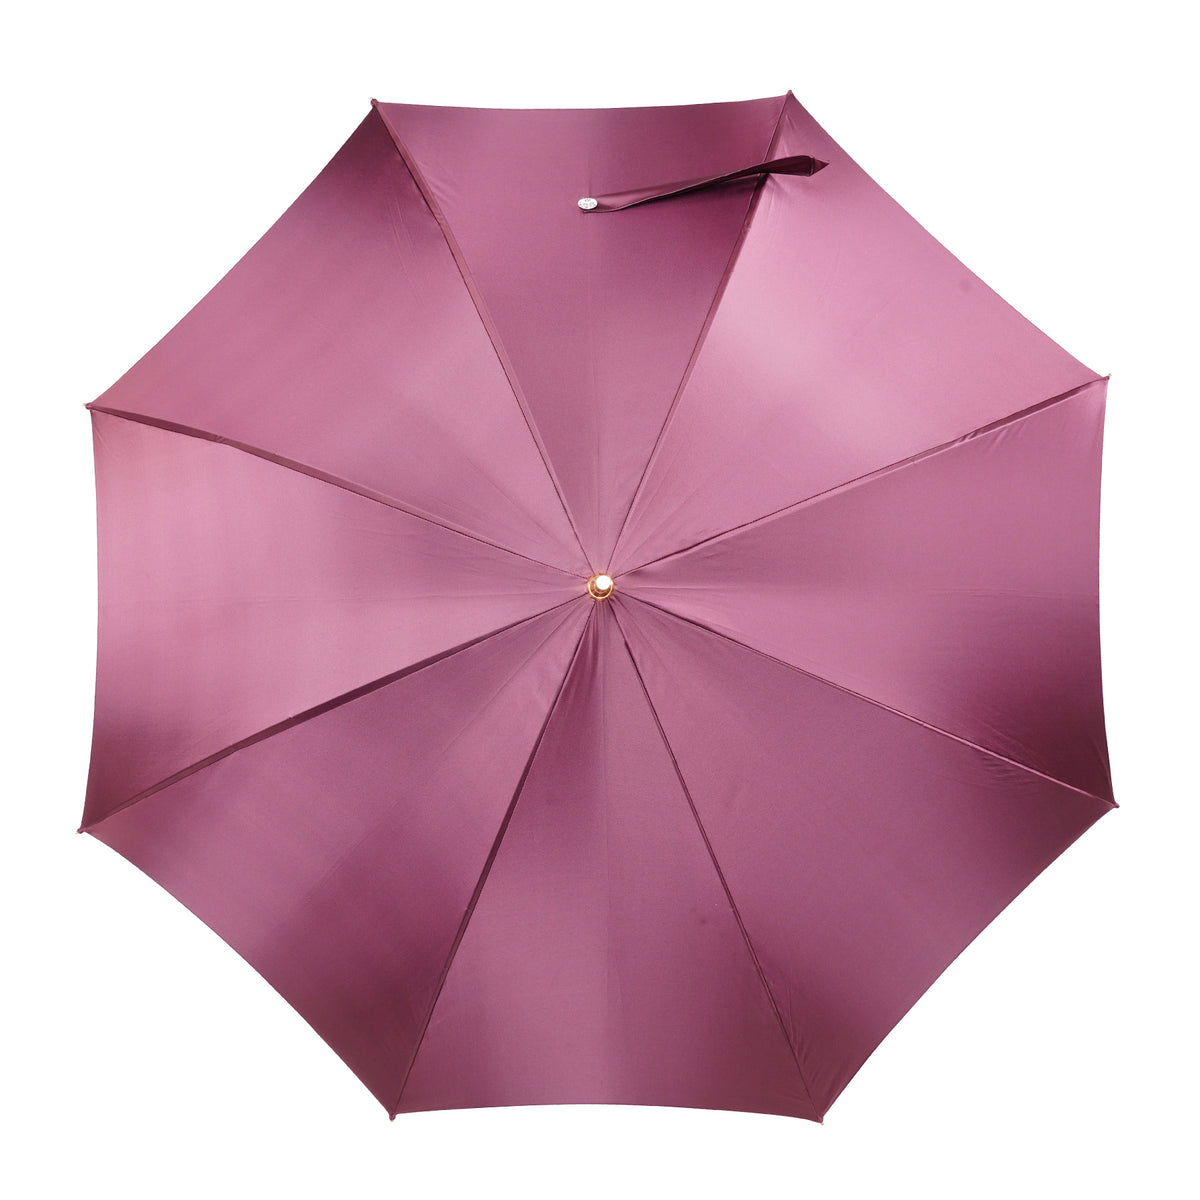 Botanical Illuminations Umbrella - Maroon